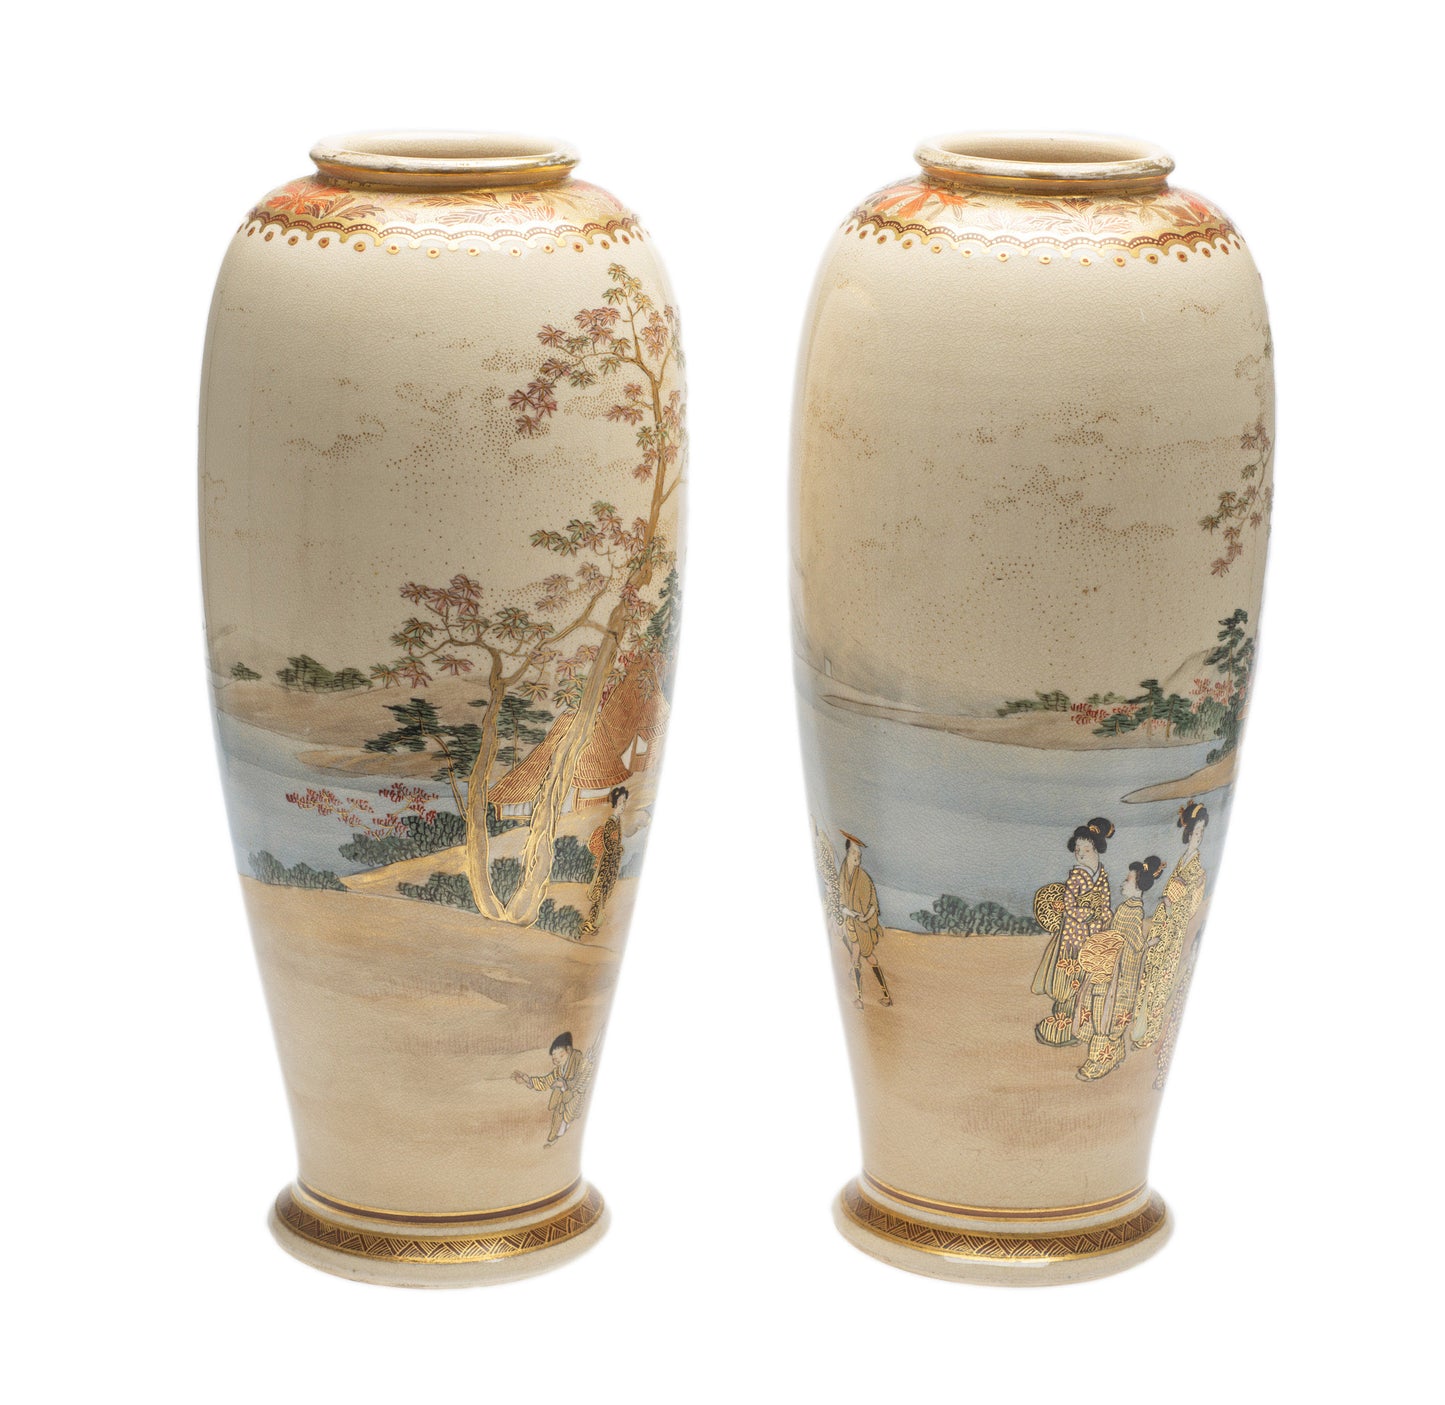 Pair Japanese Satsuma Ware Vases by Koshida - Meiji Period c1890 (Code 2546)